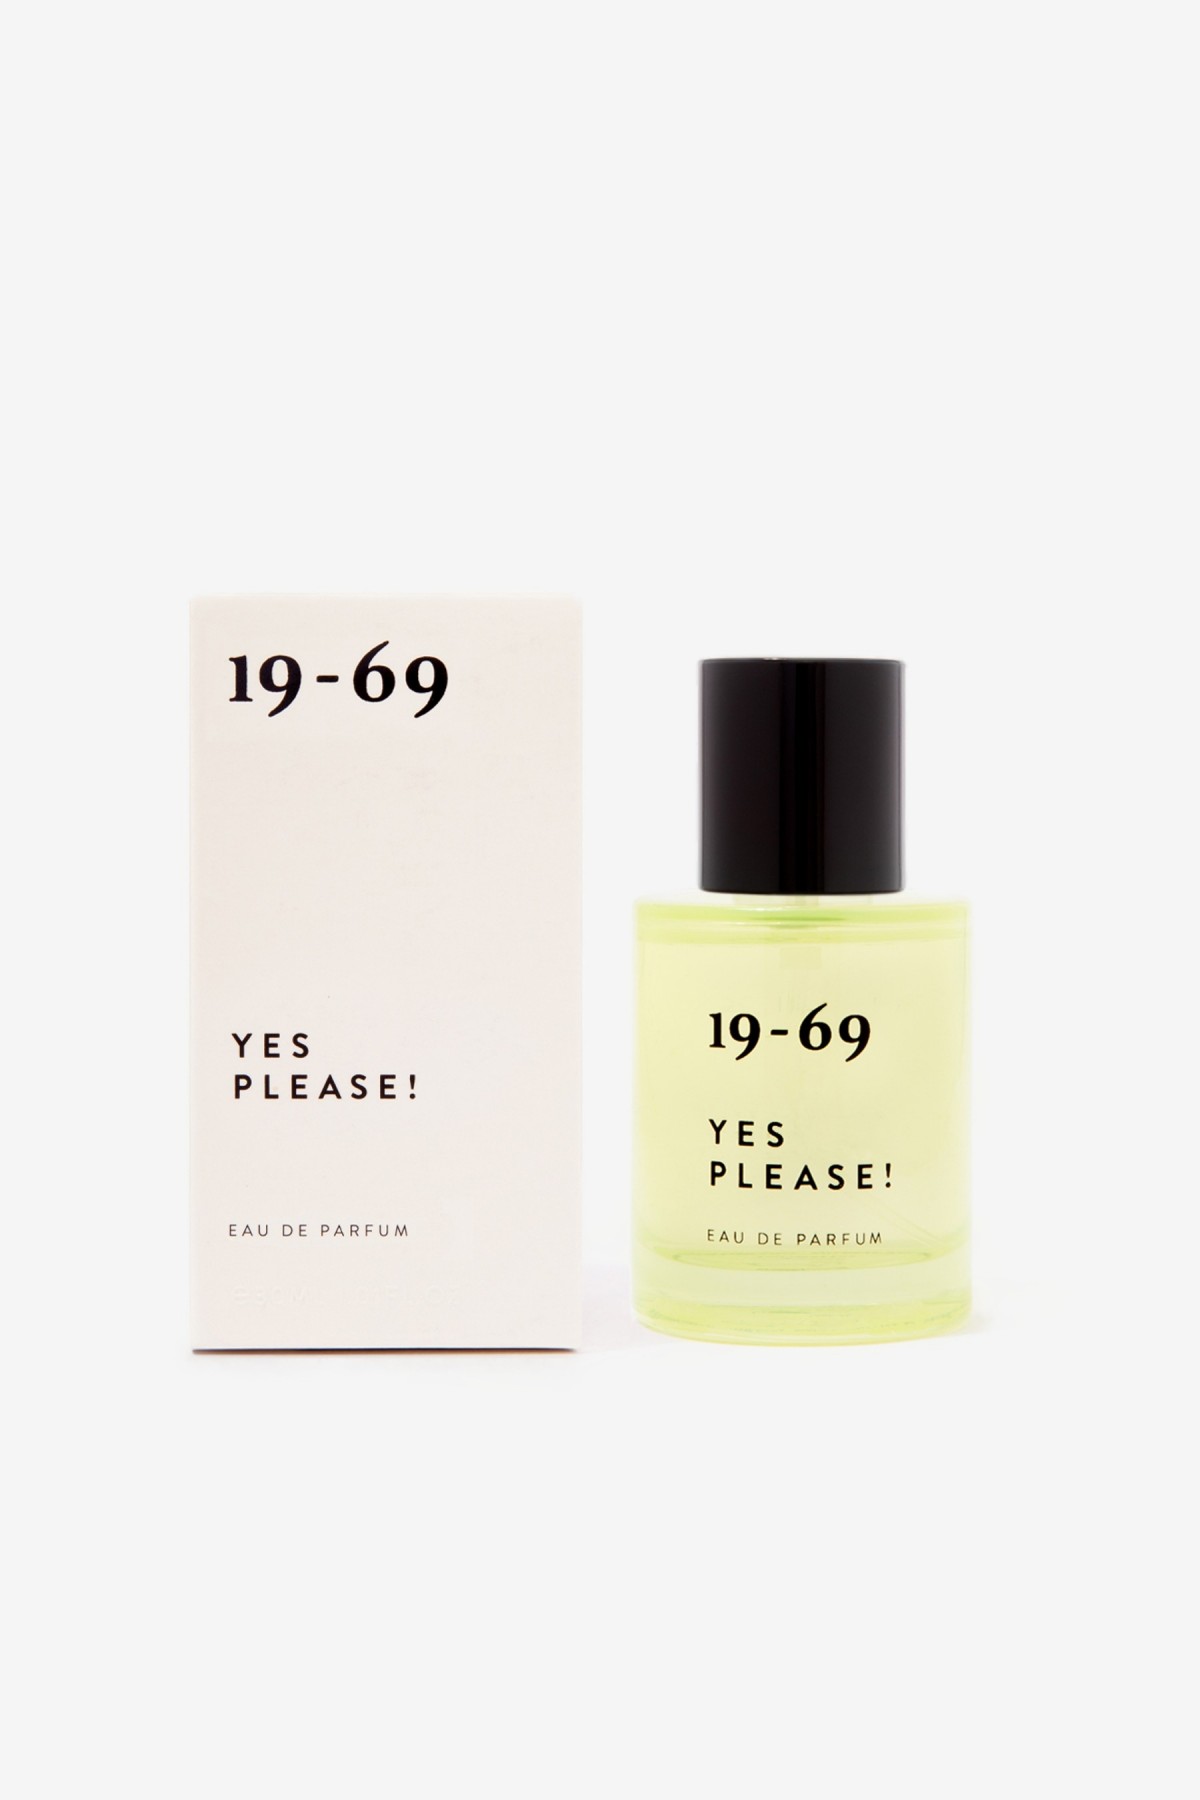 19-69 Yes please! Eau de Parfum in 30ml